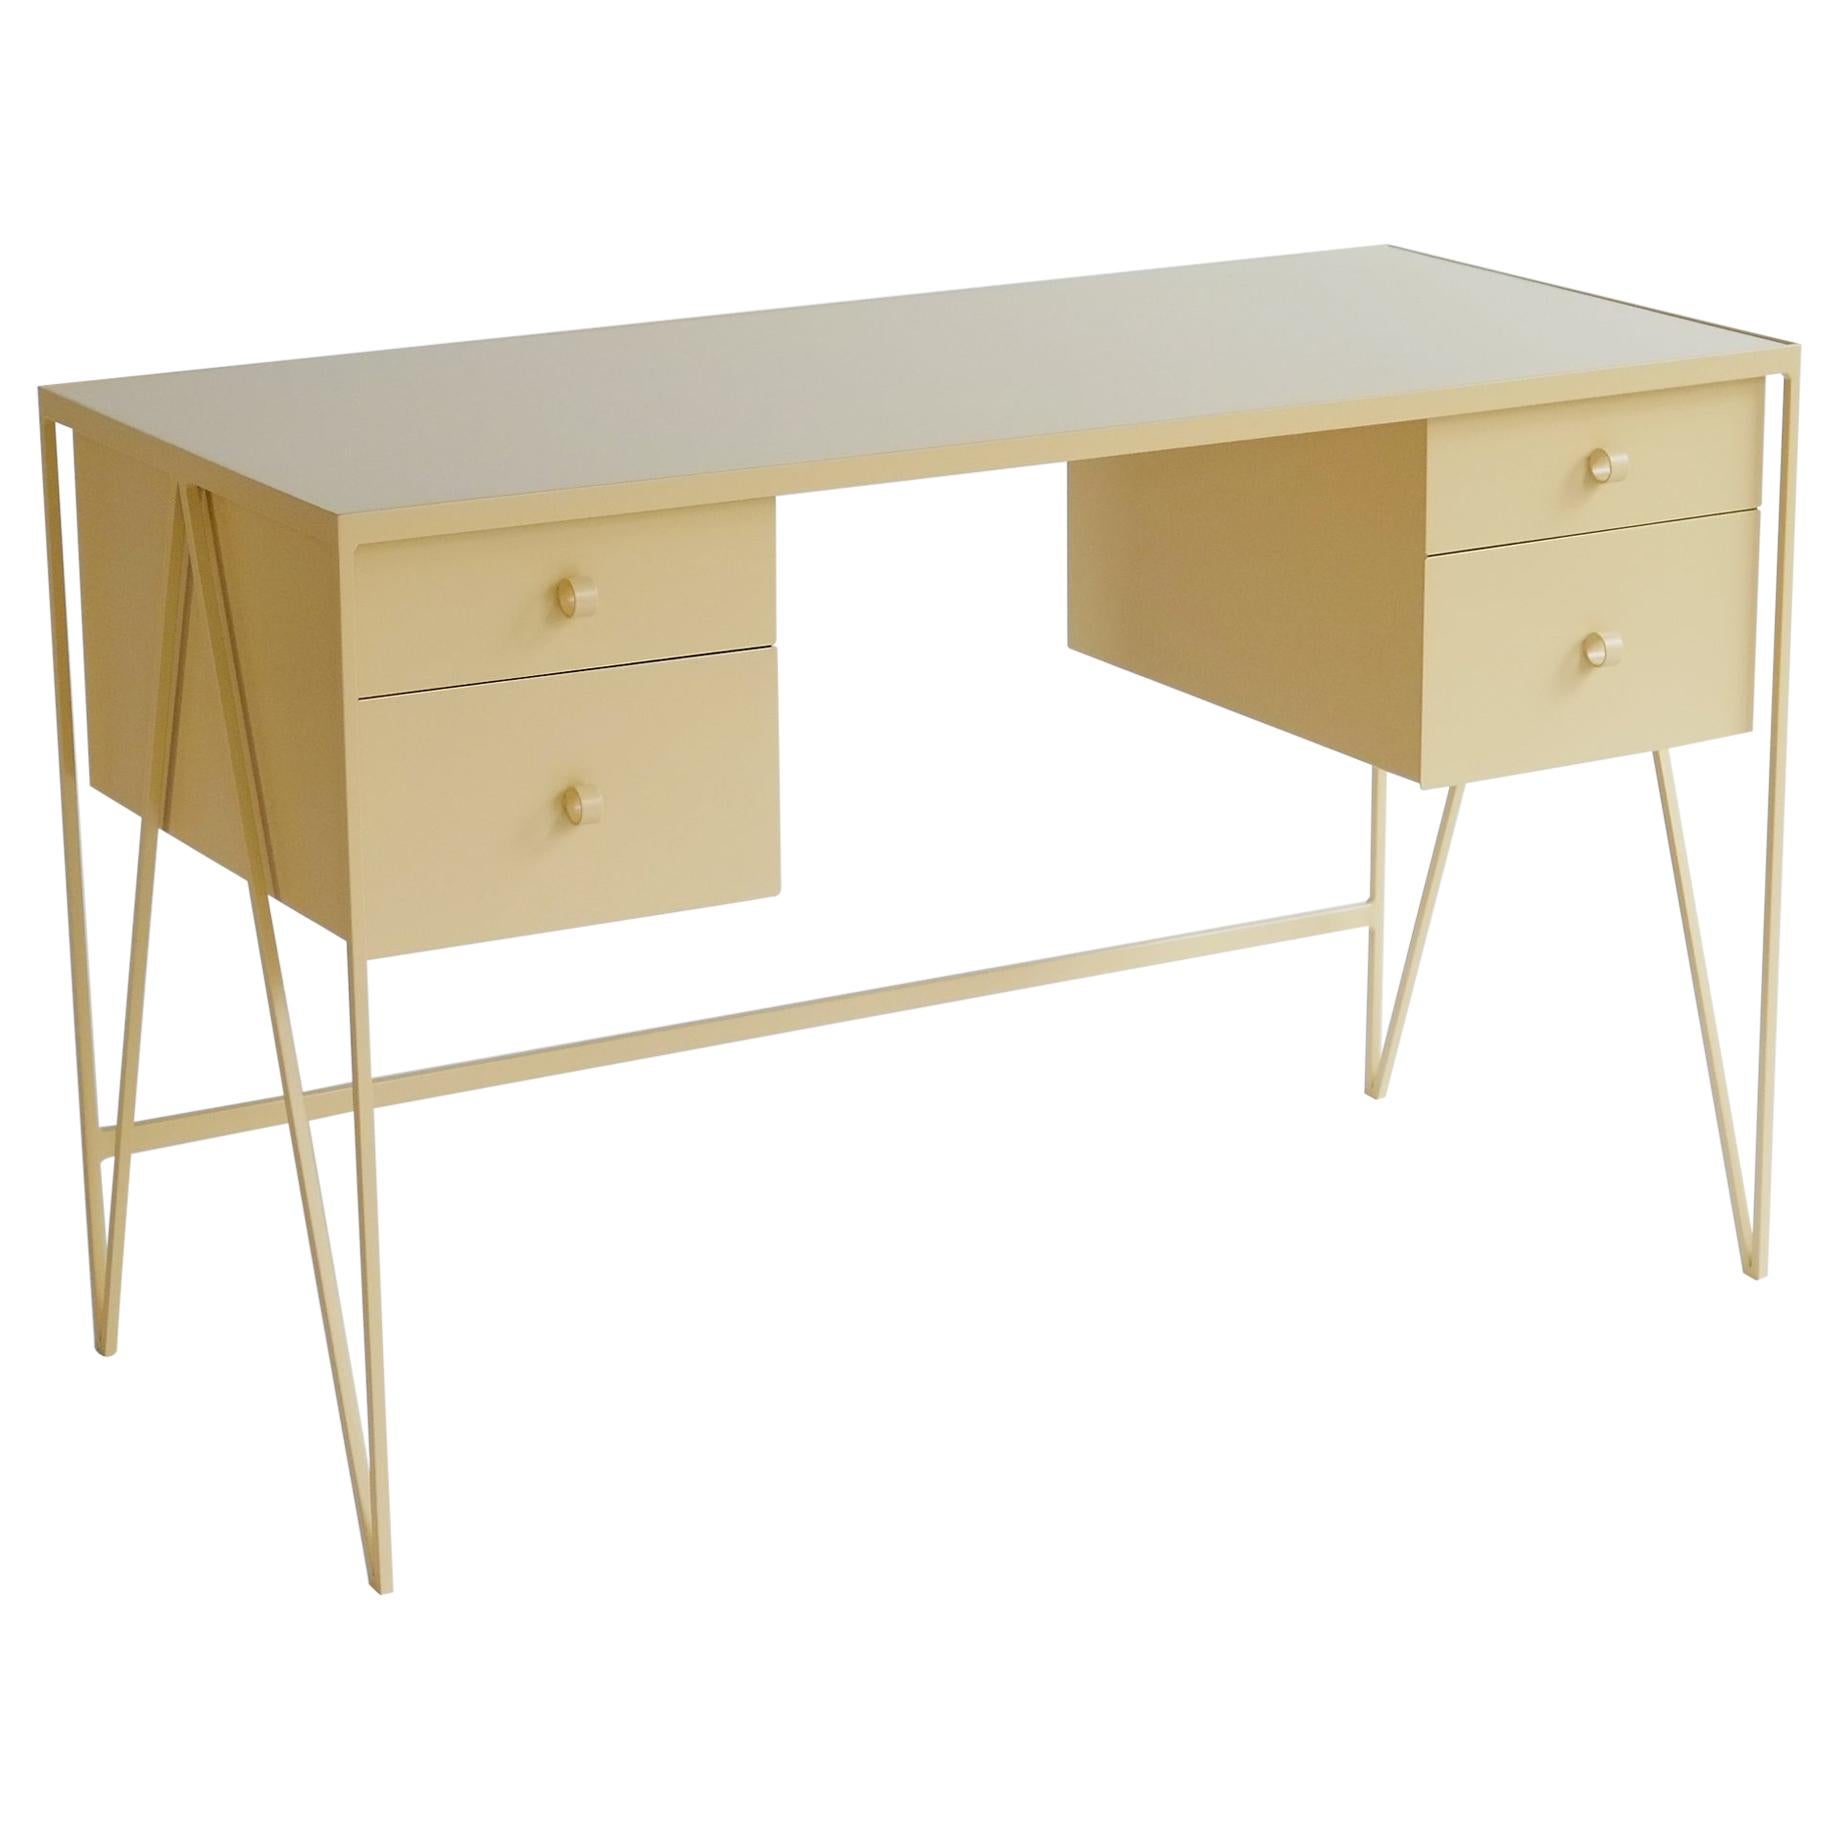 Four Drawer Butternut Study Desk with Linoleum Top, Cream Desk - Customizable For Sale